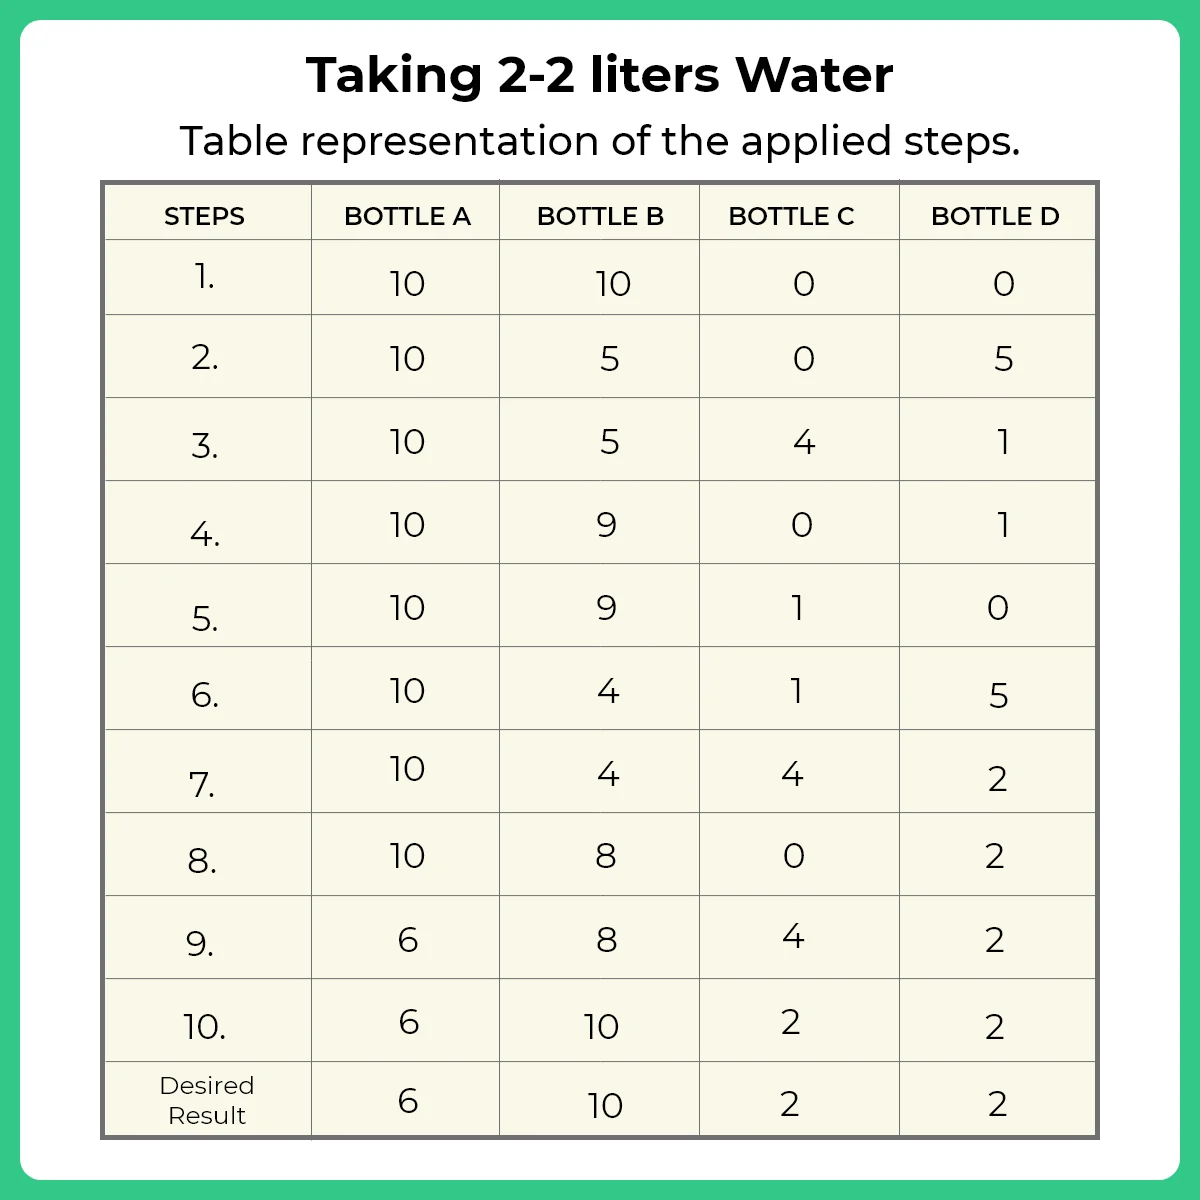 Taking 2-2 Liters of Water